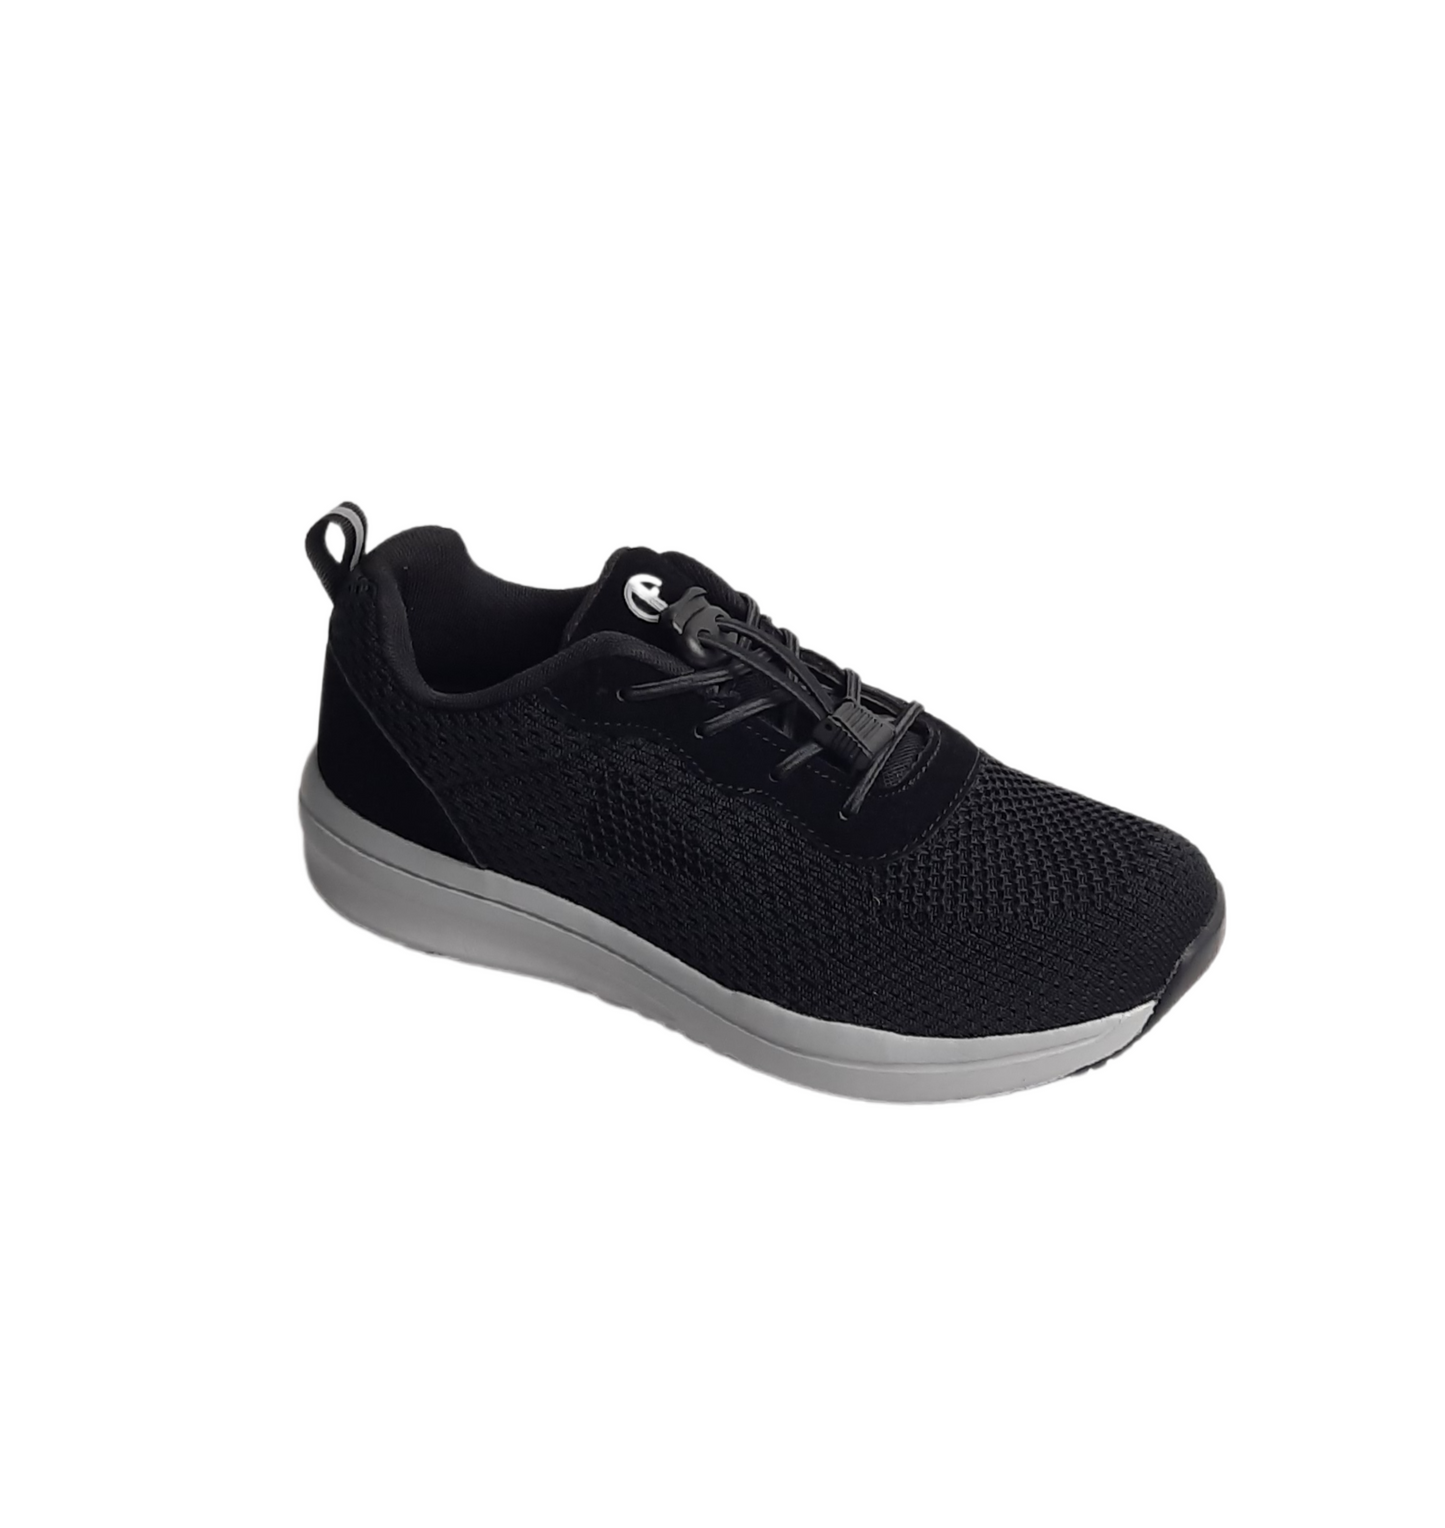 Unisex Black Sports Shoes